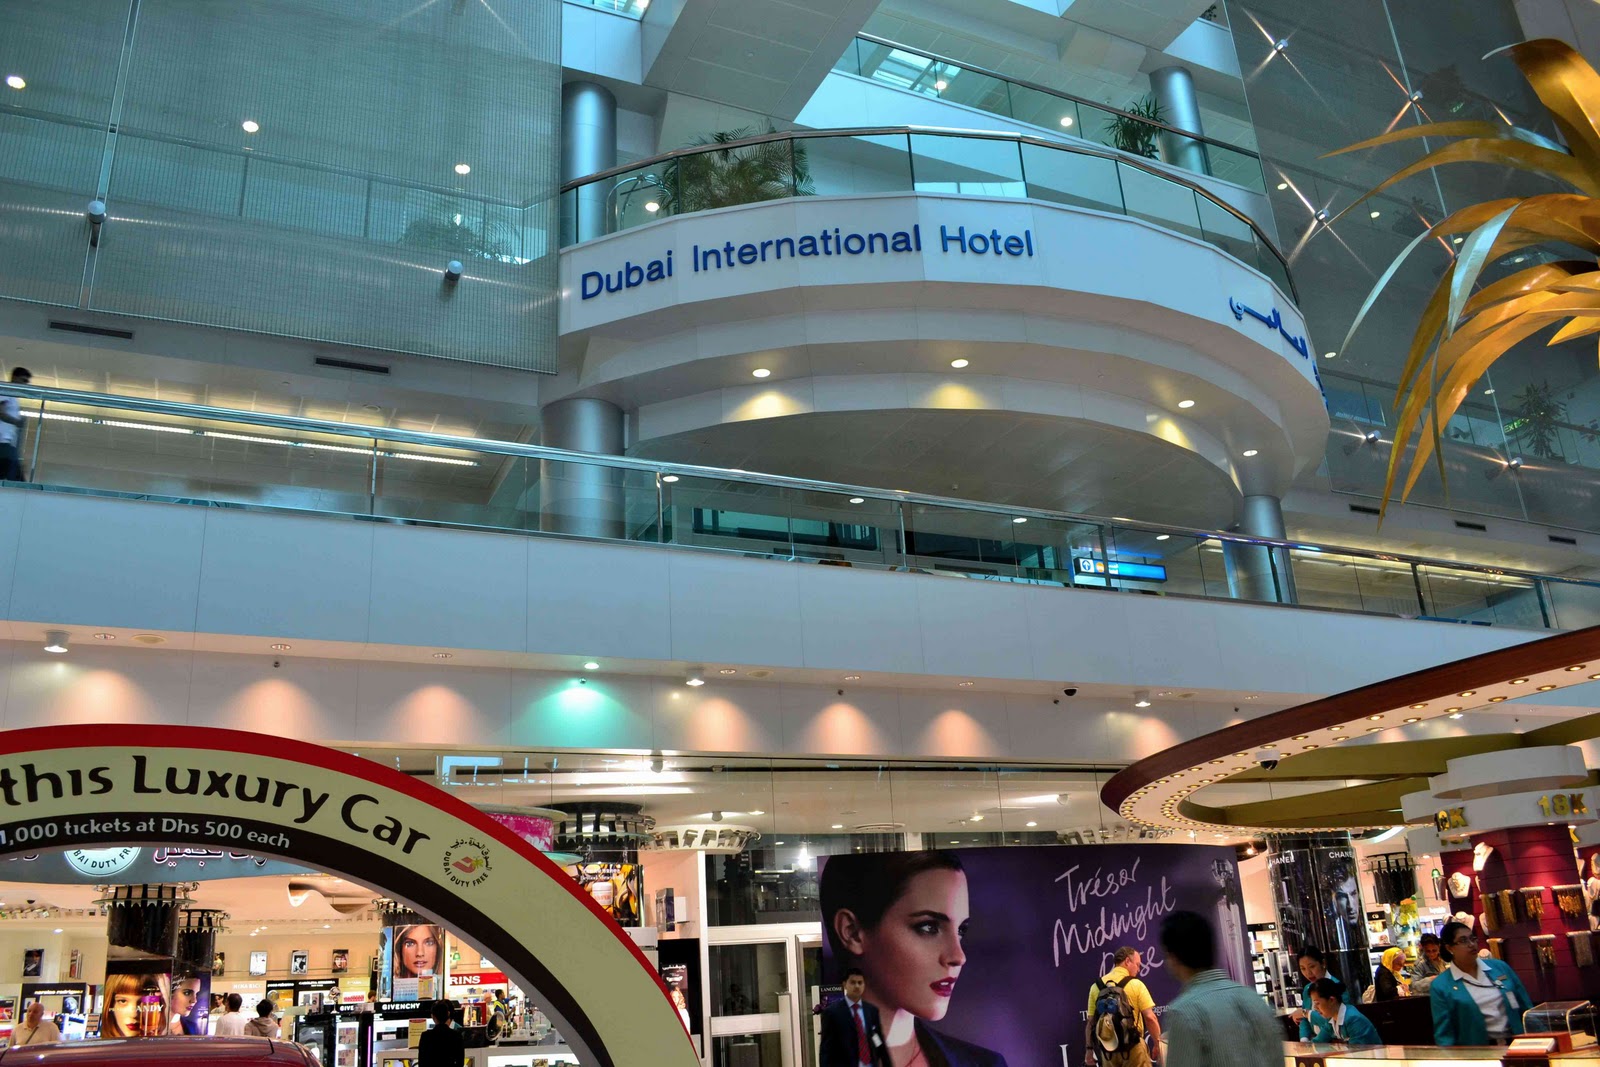 wandering... can't go home: Dubai Airport International Hotel